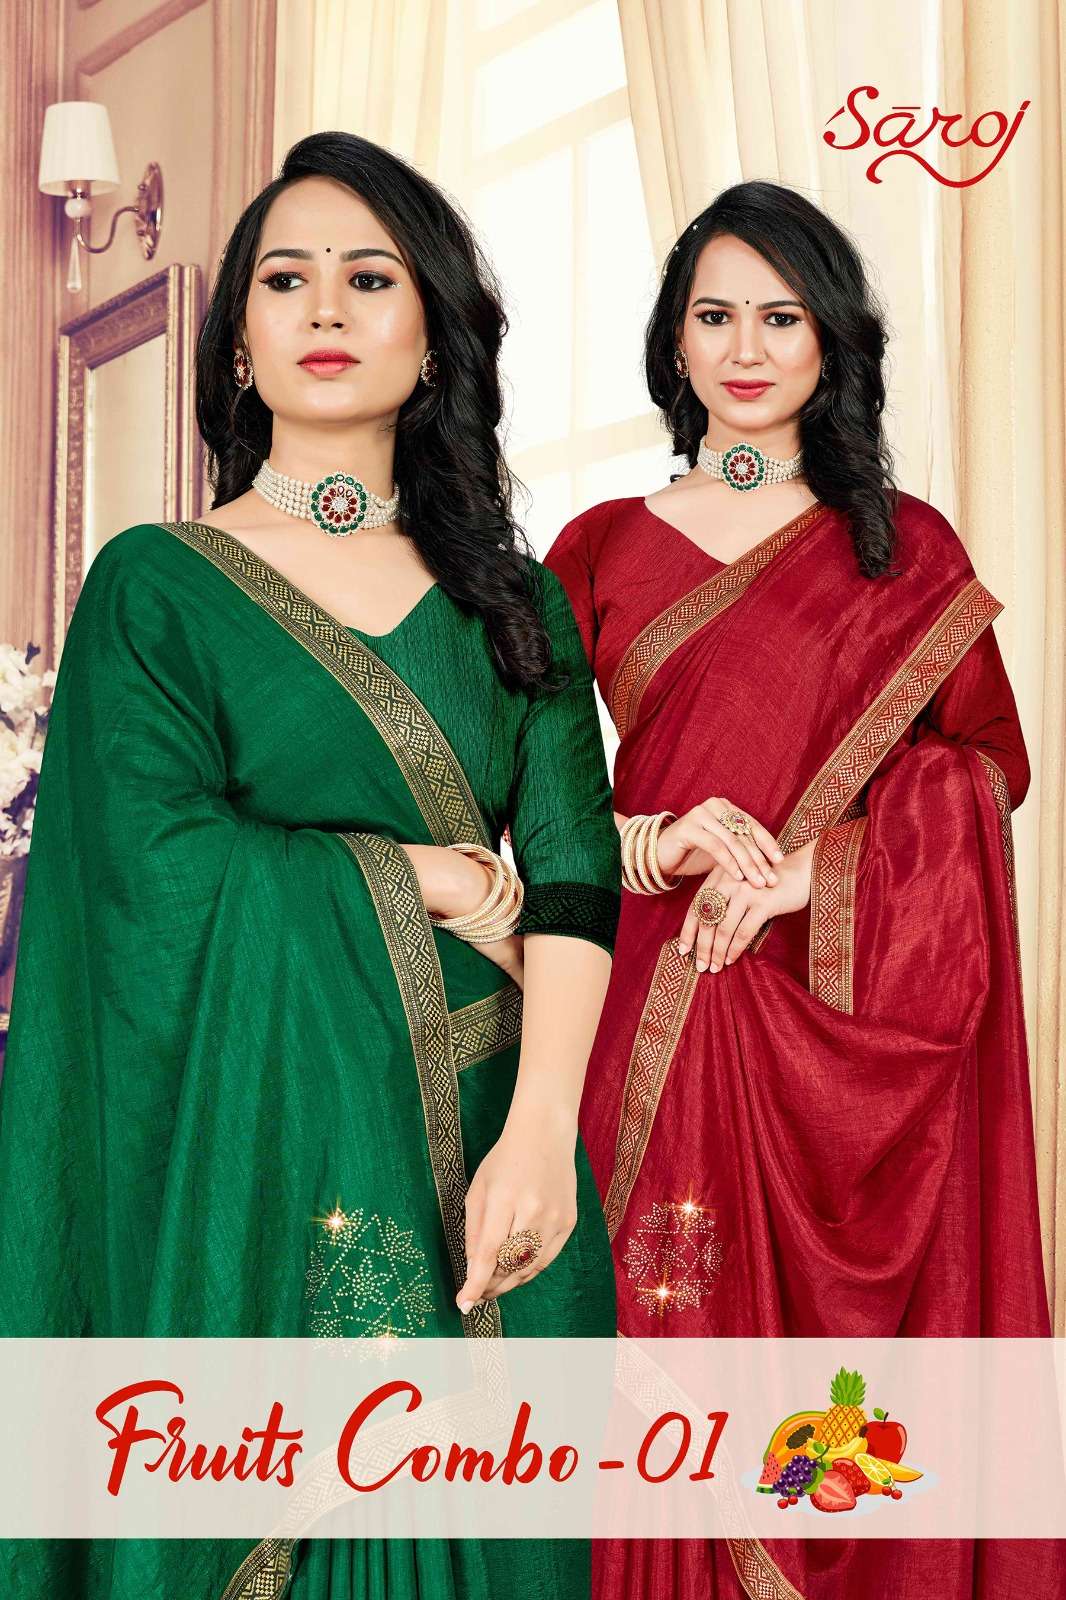 Saroj textile presents Fruit combo-1 Designer casual sarees catalogue